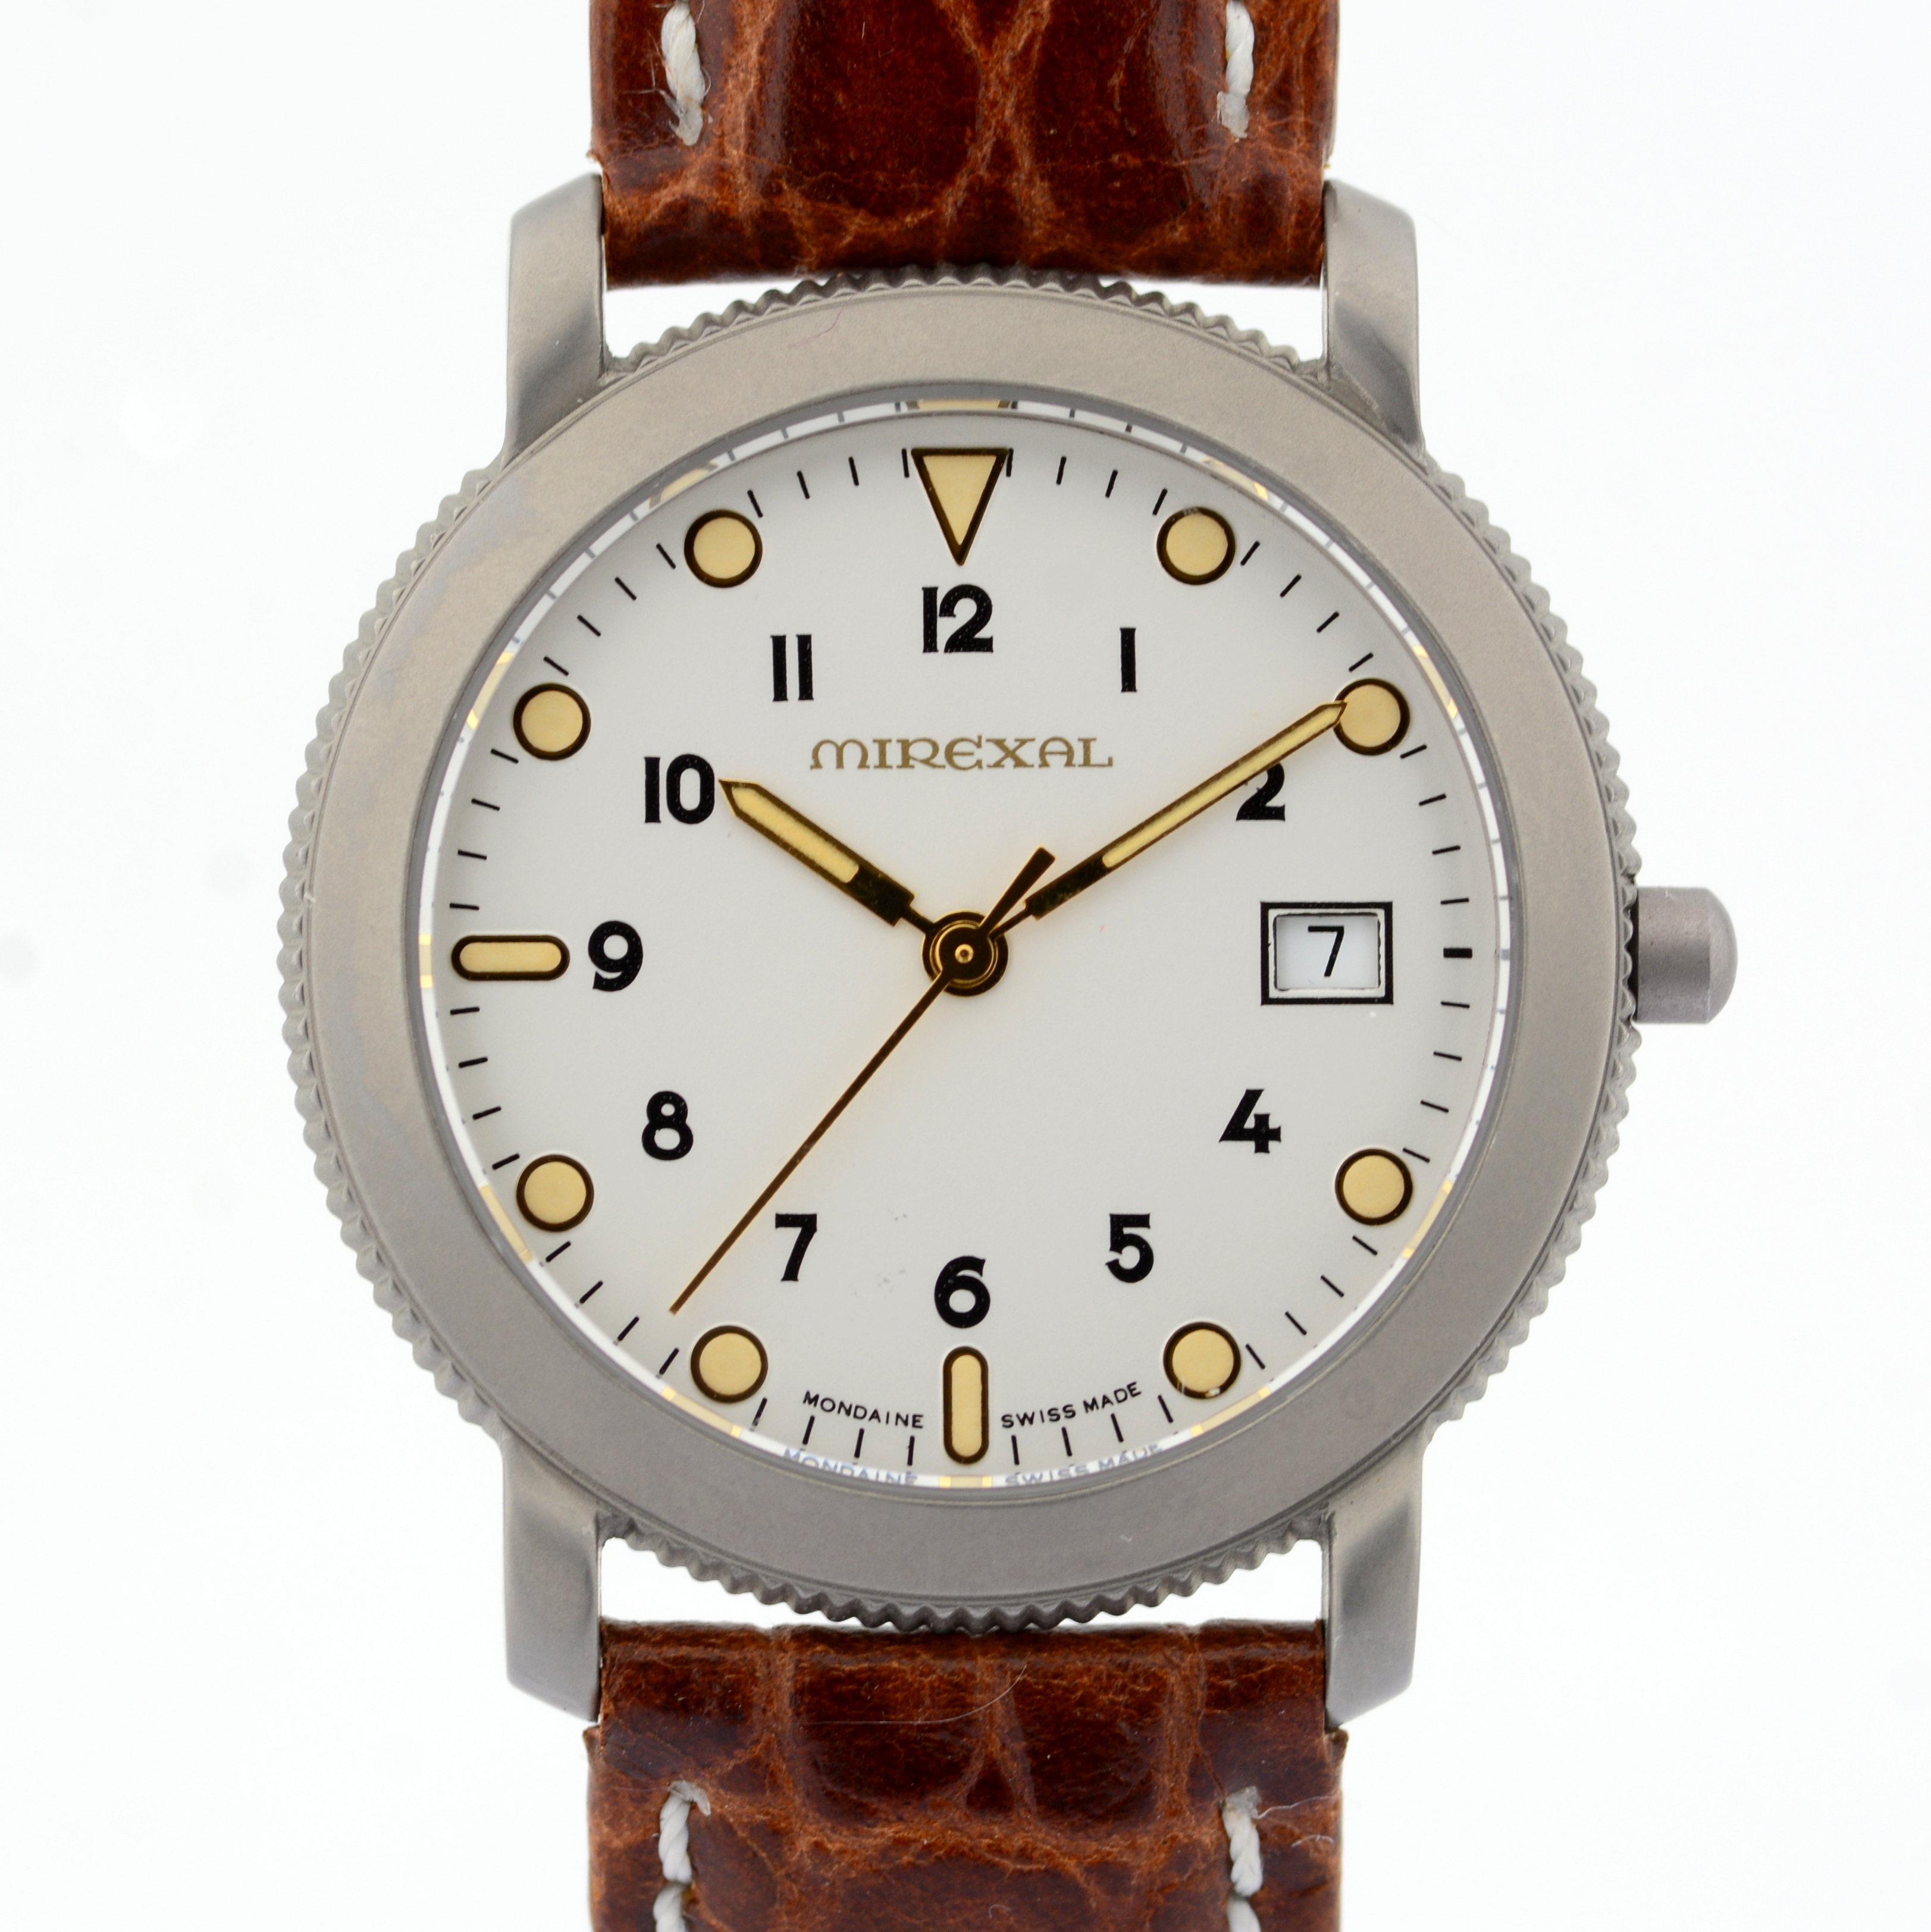 Mondaine / Mirexal Date - (Unworn) Gentlmen's Titanium Wrist Watch